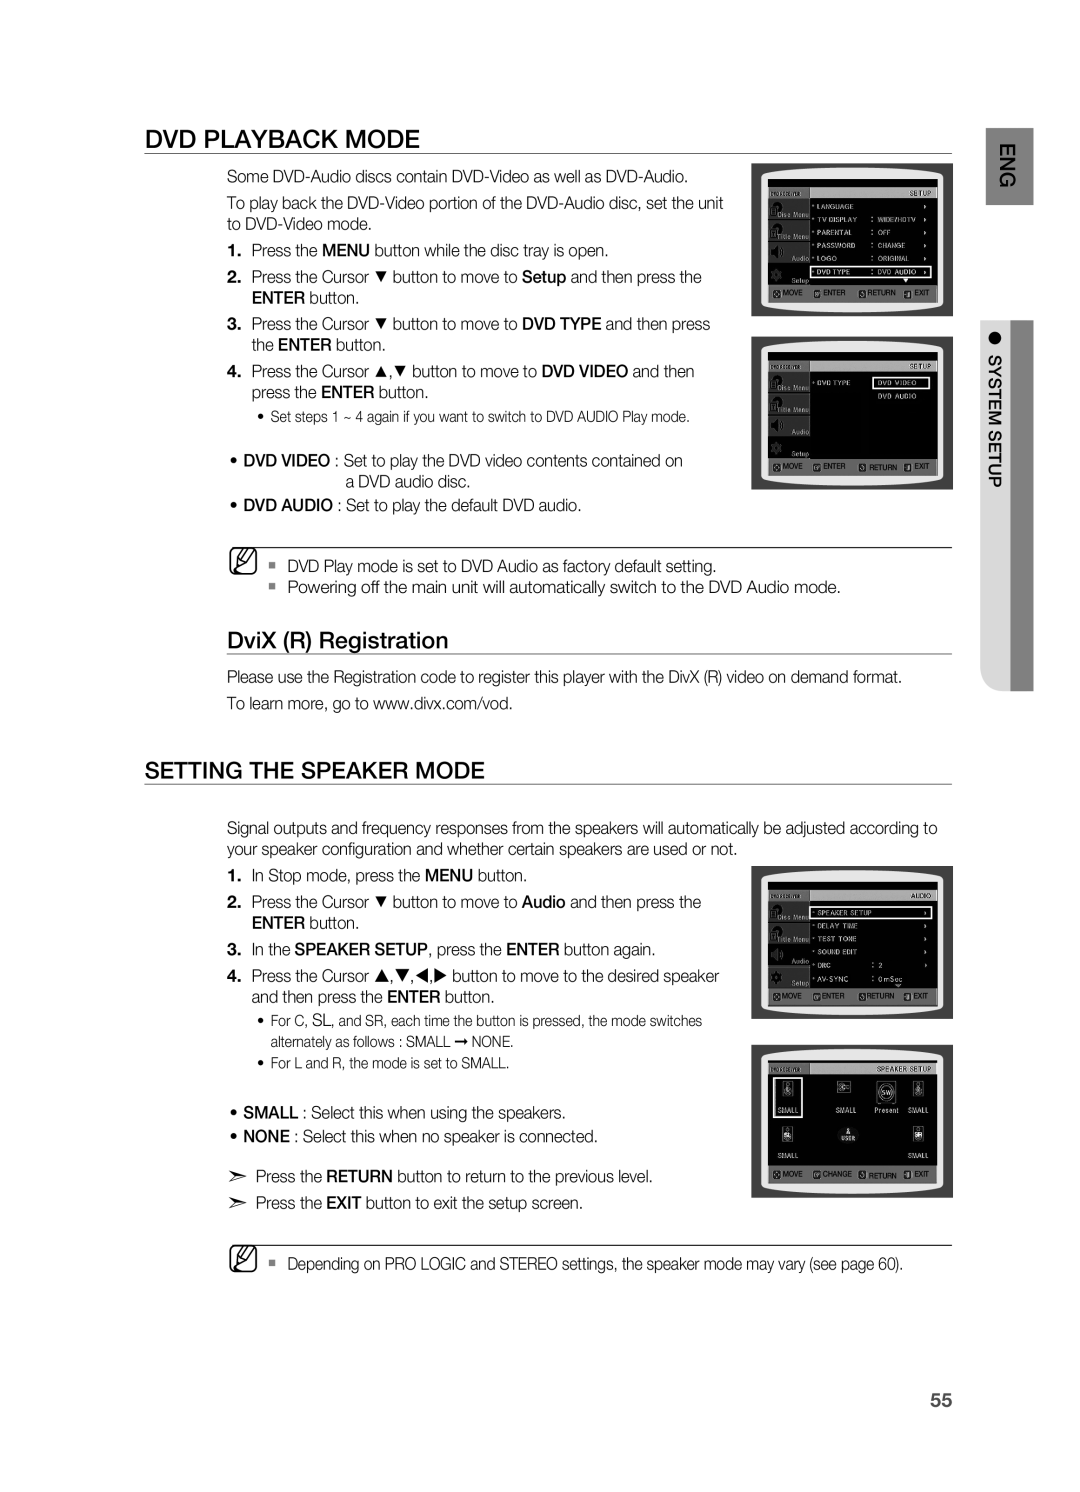 Samsung AH68-02055S manual DVD Playback Mode, DviX R Registration, Setting the Speaker Mode 